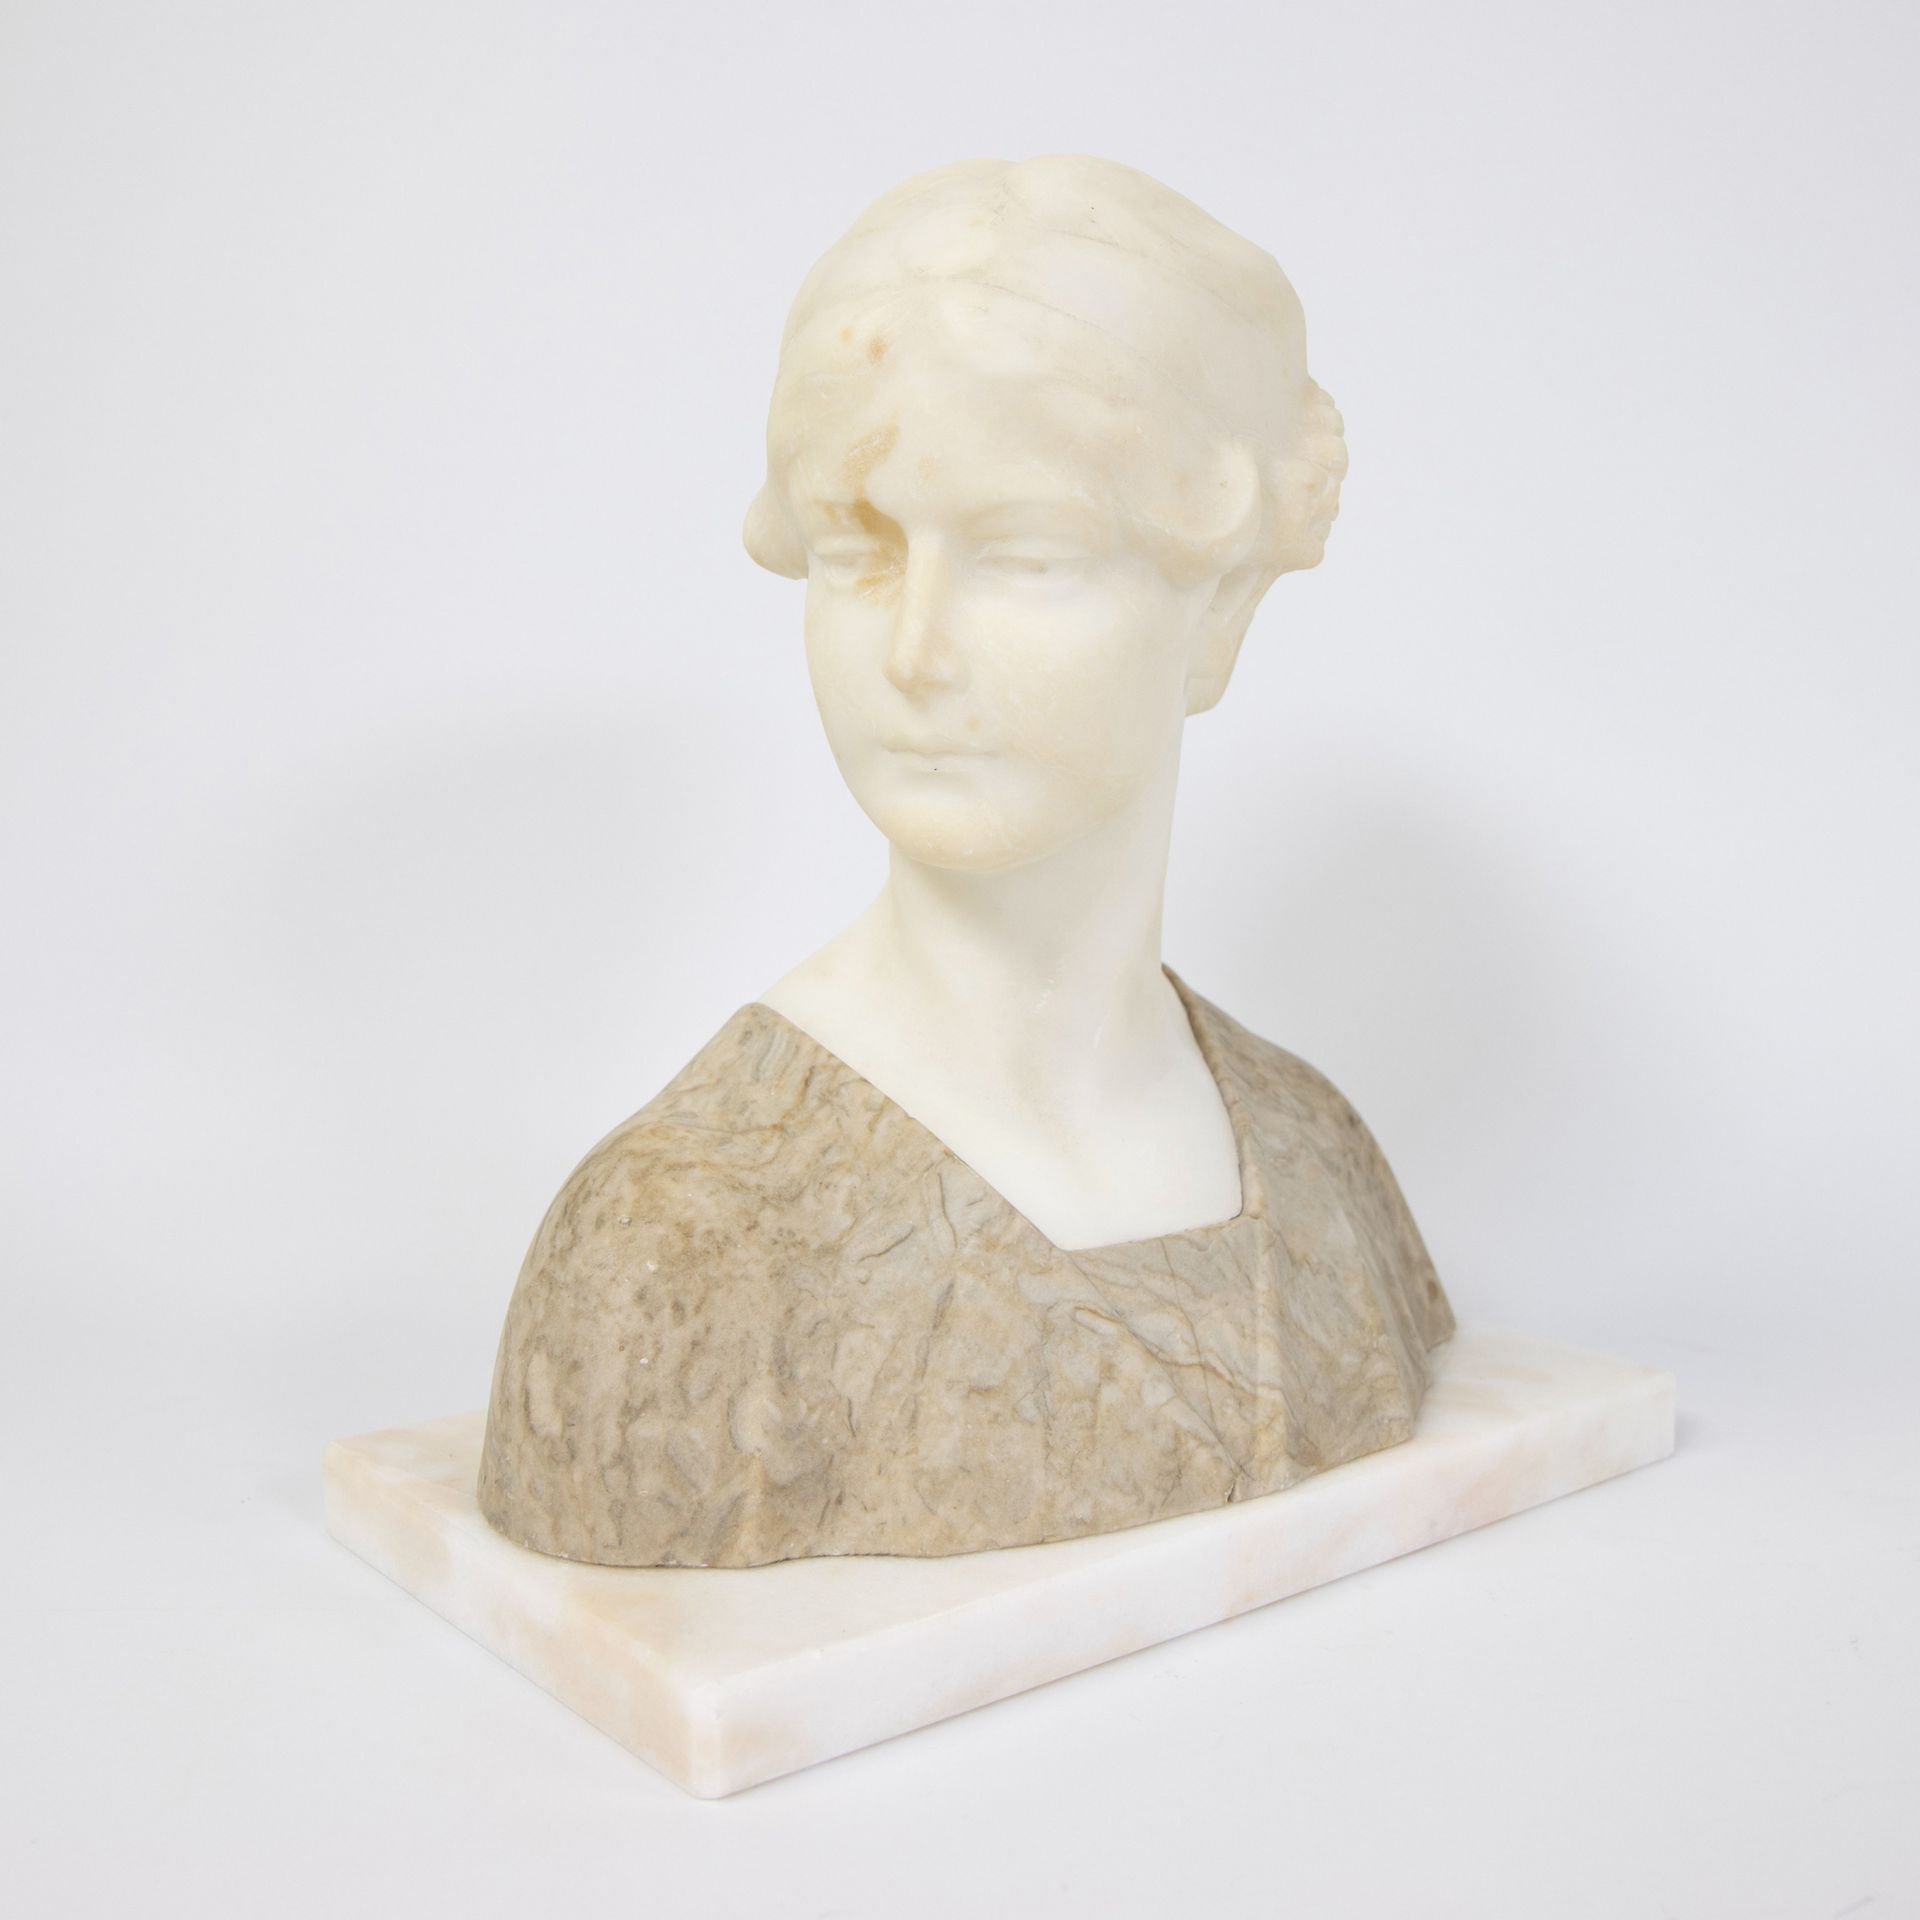 Null Women's bust in alabaster ca 1900
Damesbuste in albast ca 1900
H 27 cm